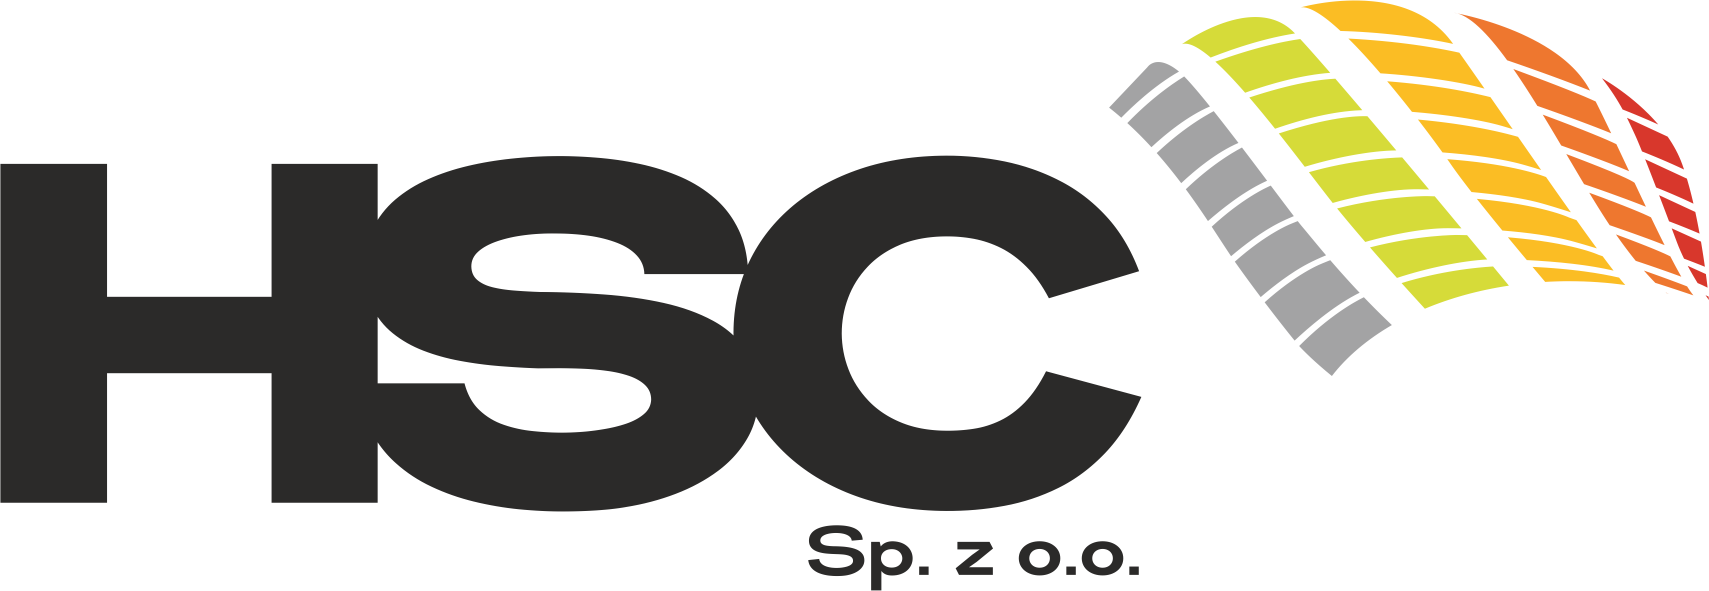 logo_HSC_biale_tlo